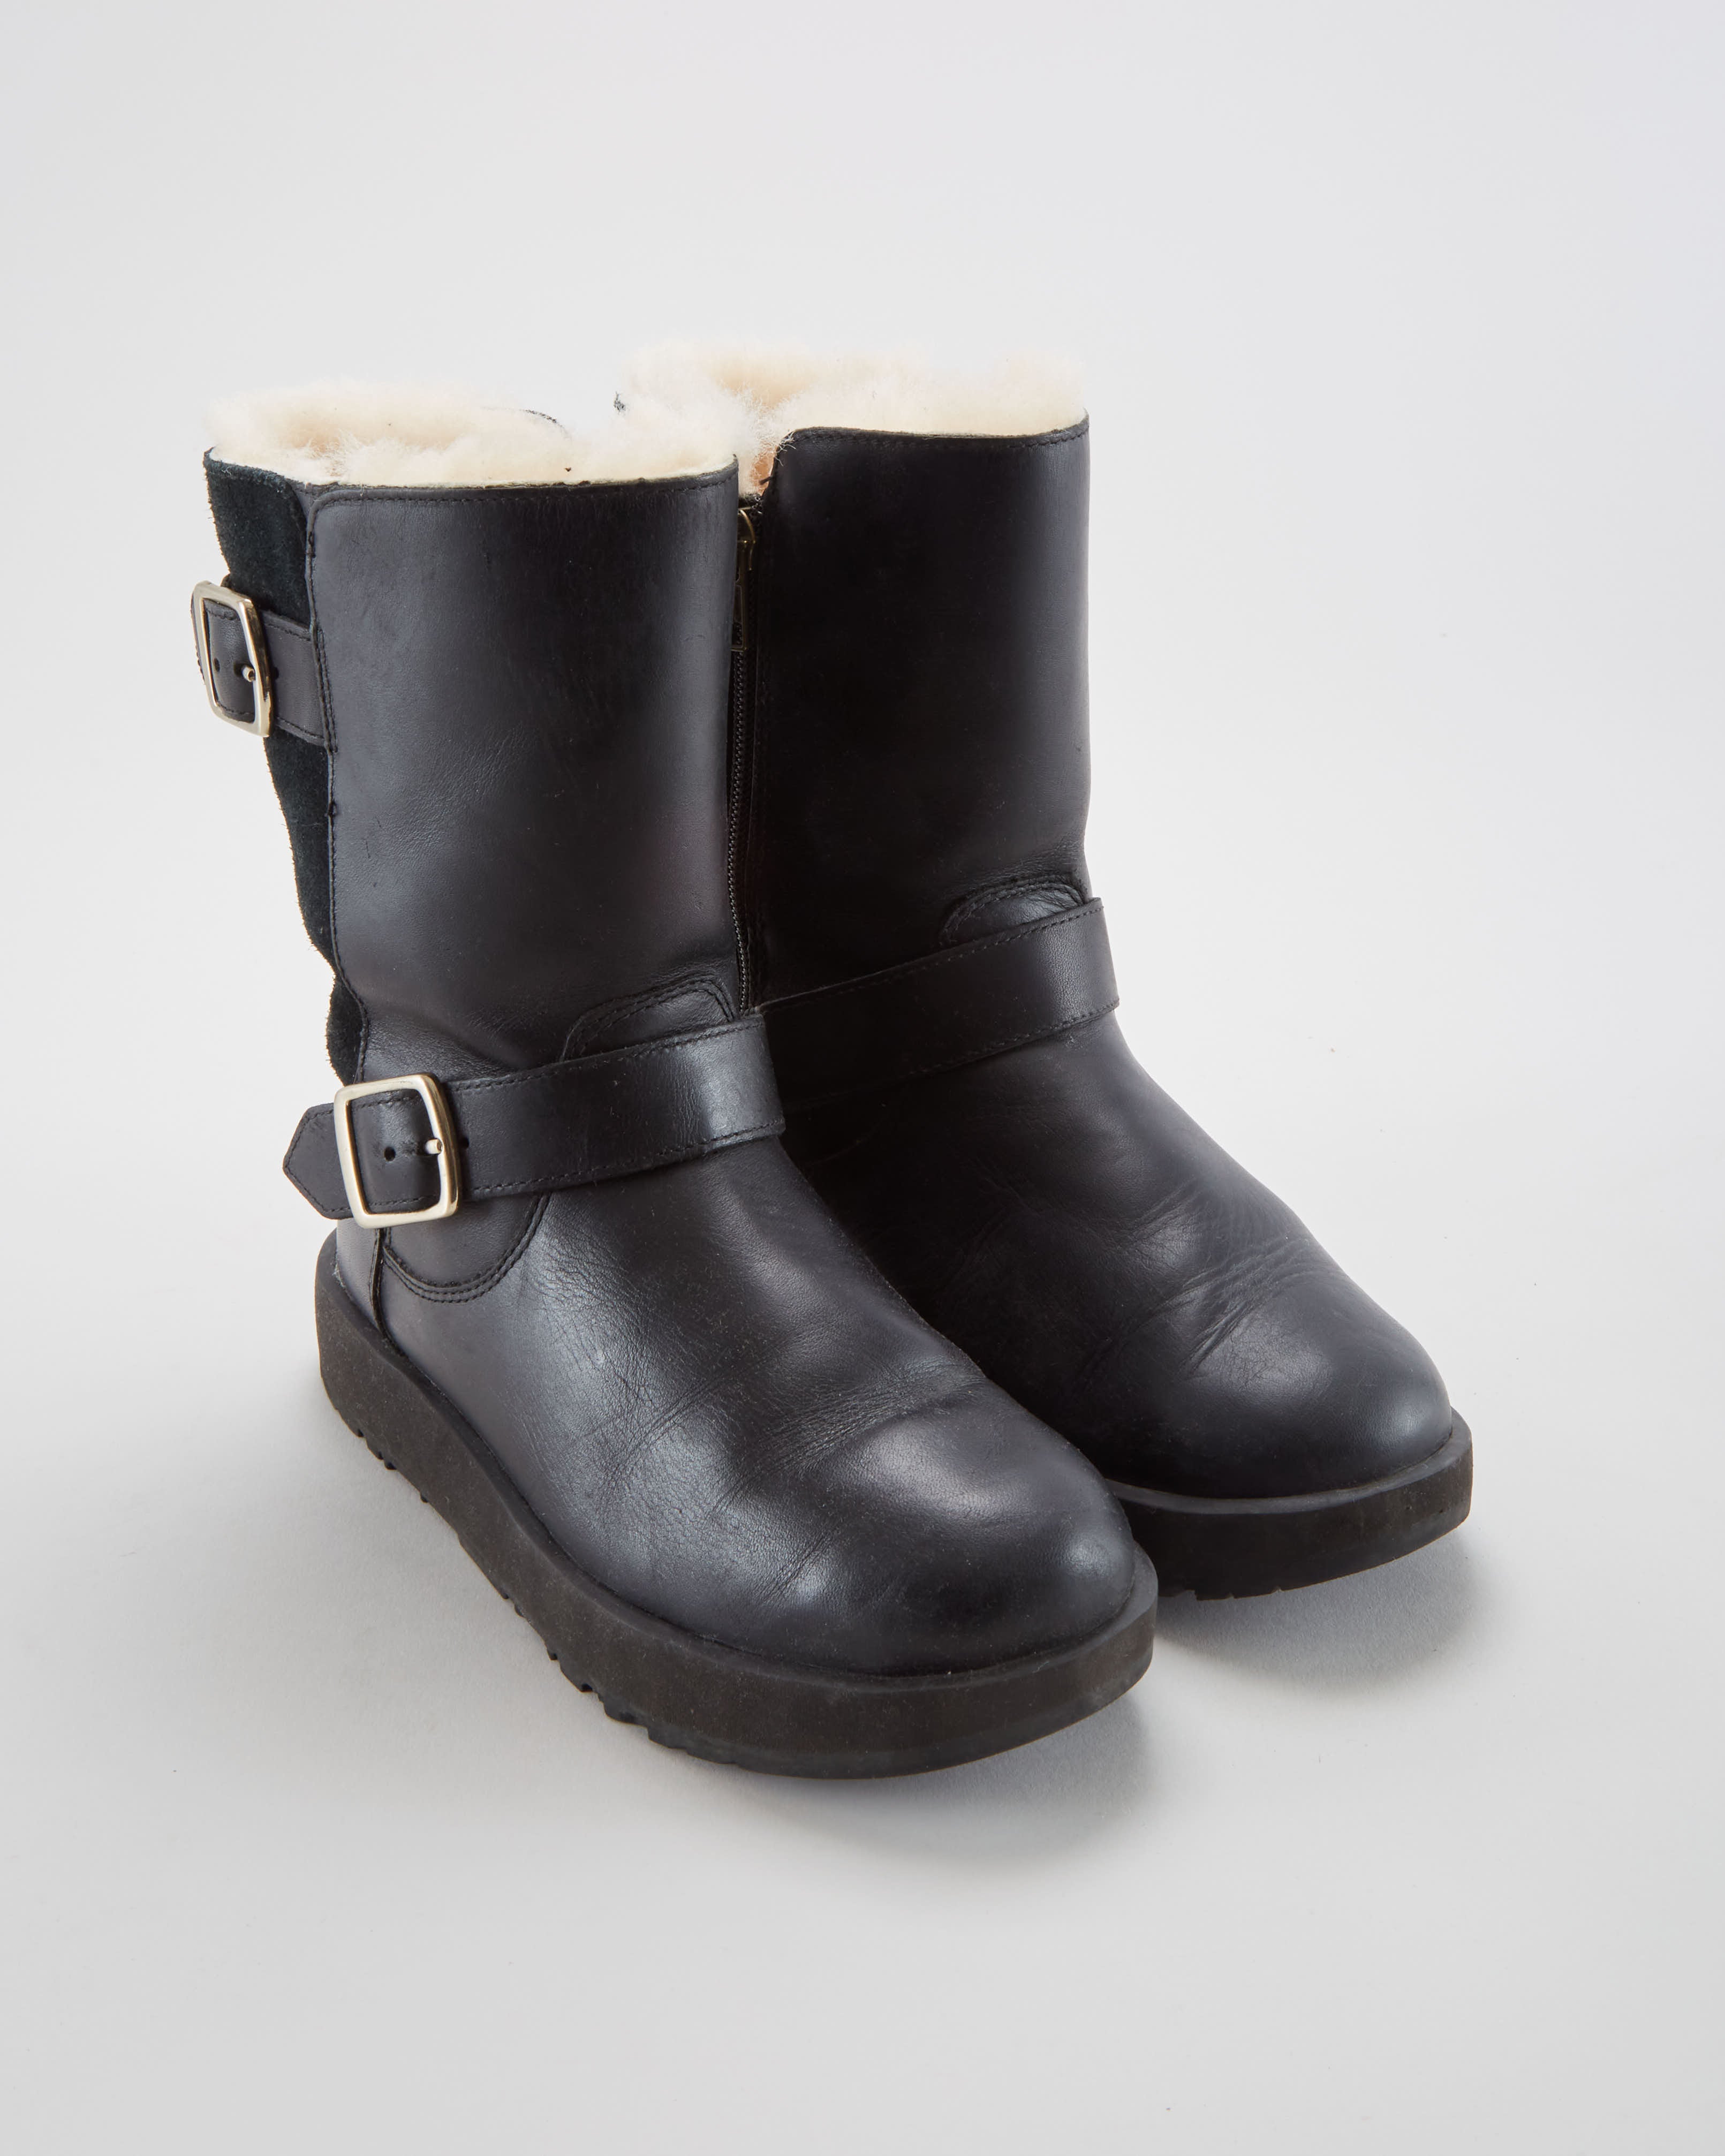 Ugg Australia Waterproof Black Boots - Womens UK 4.5